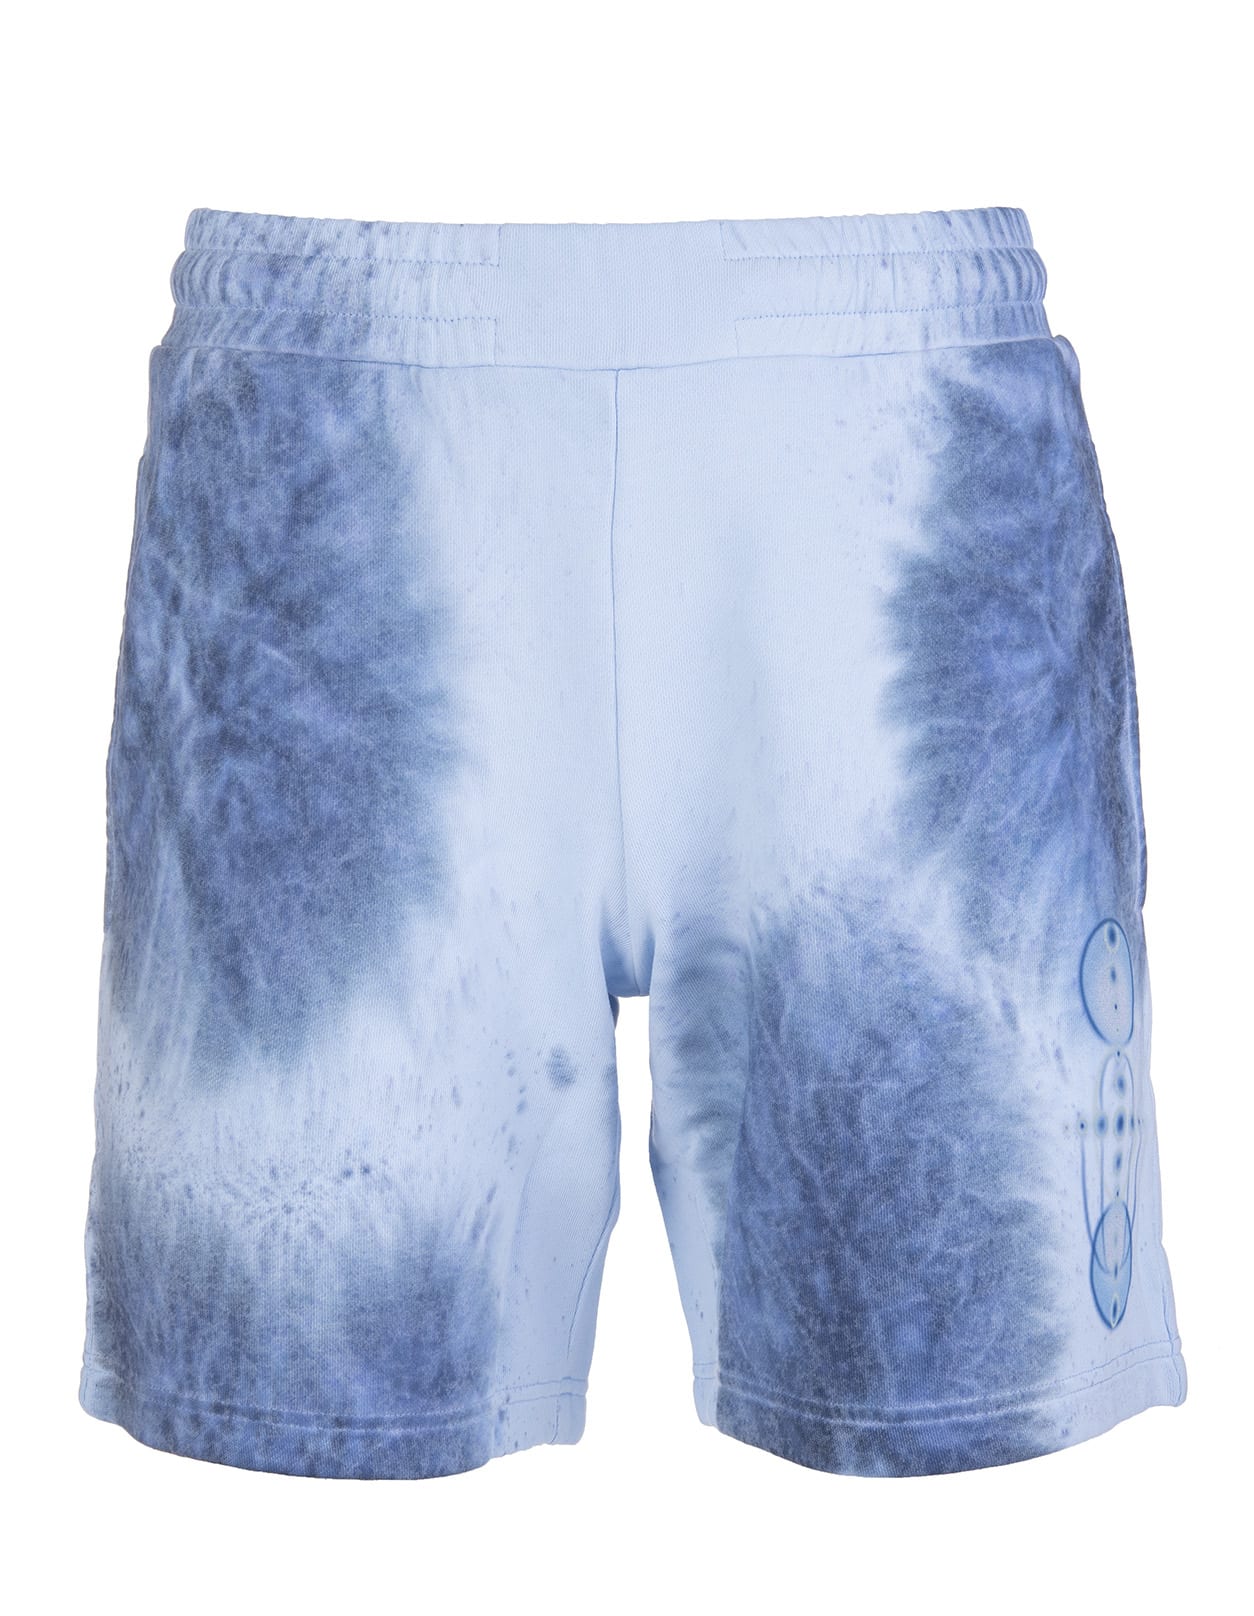 McQ Alexander McQueen Man Light Blue Sports Shorts With Blue Tie-dye Print